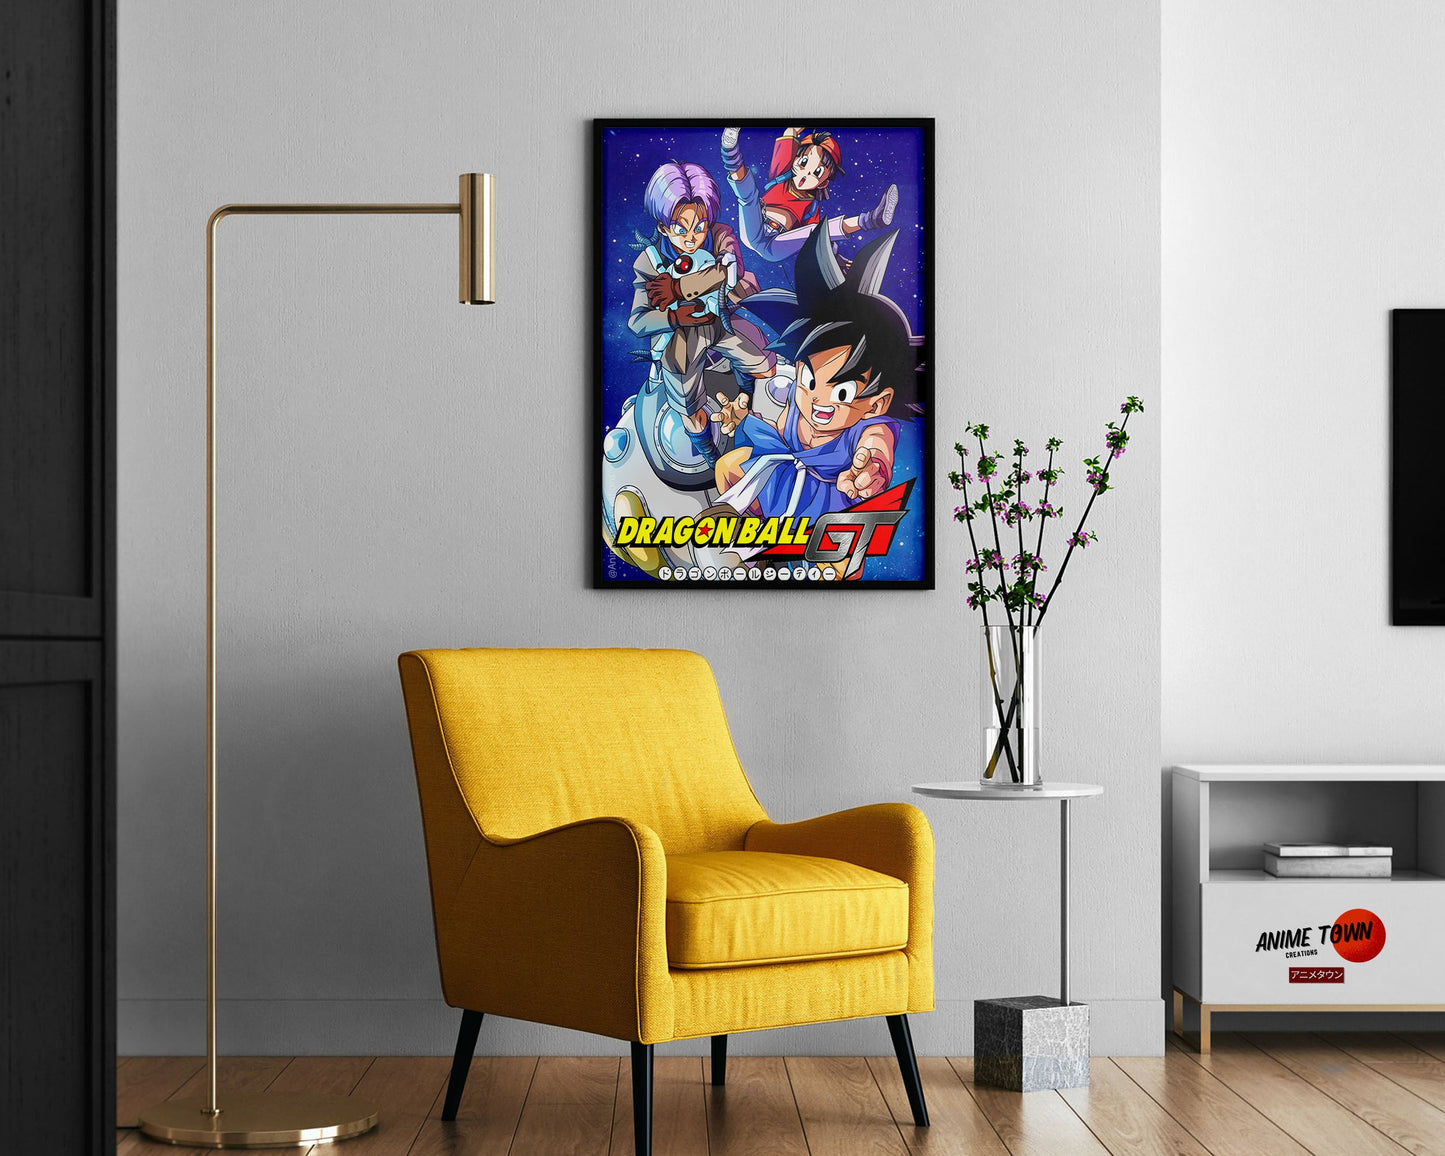 Anime Town Creations Poster Dragon Ball GT 11" x 17" Home Goods - Anime Dragon Ball Poster